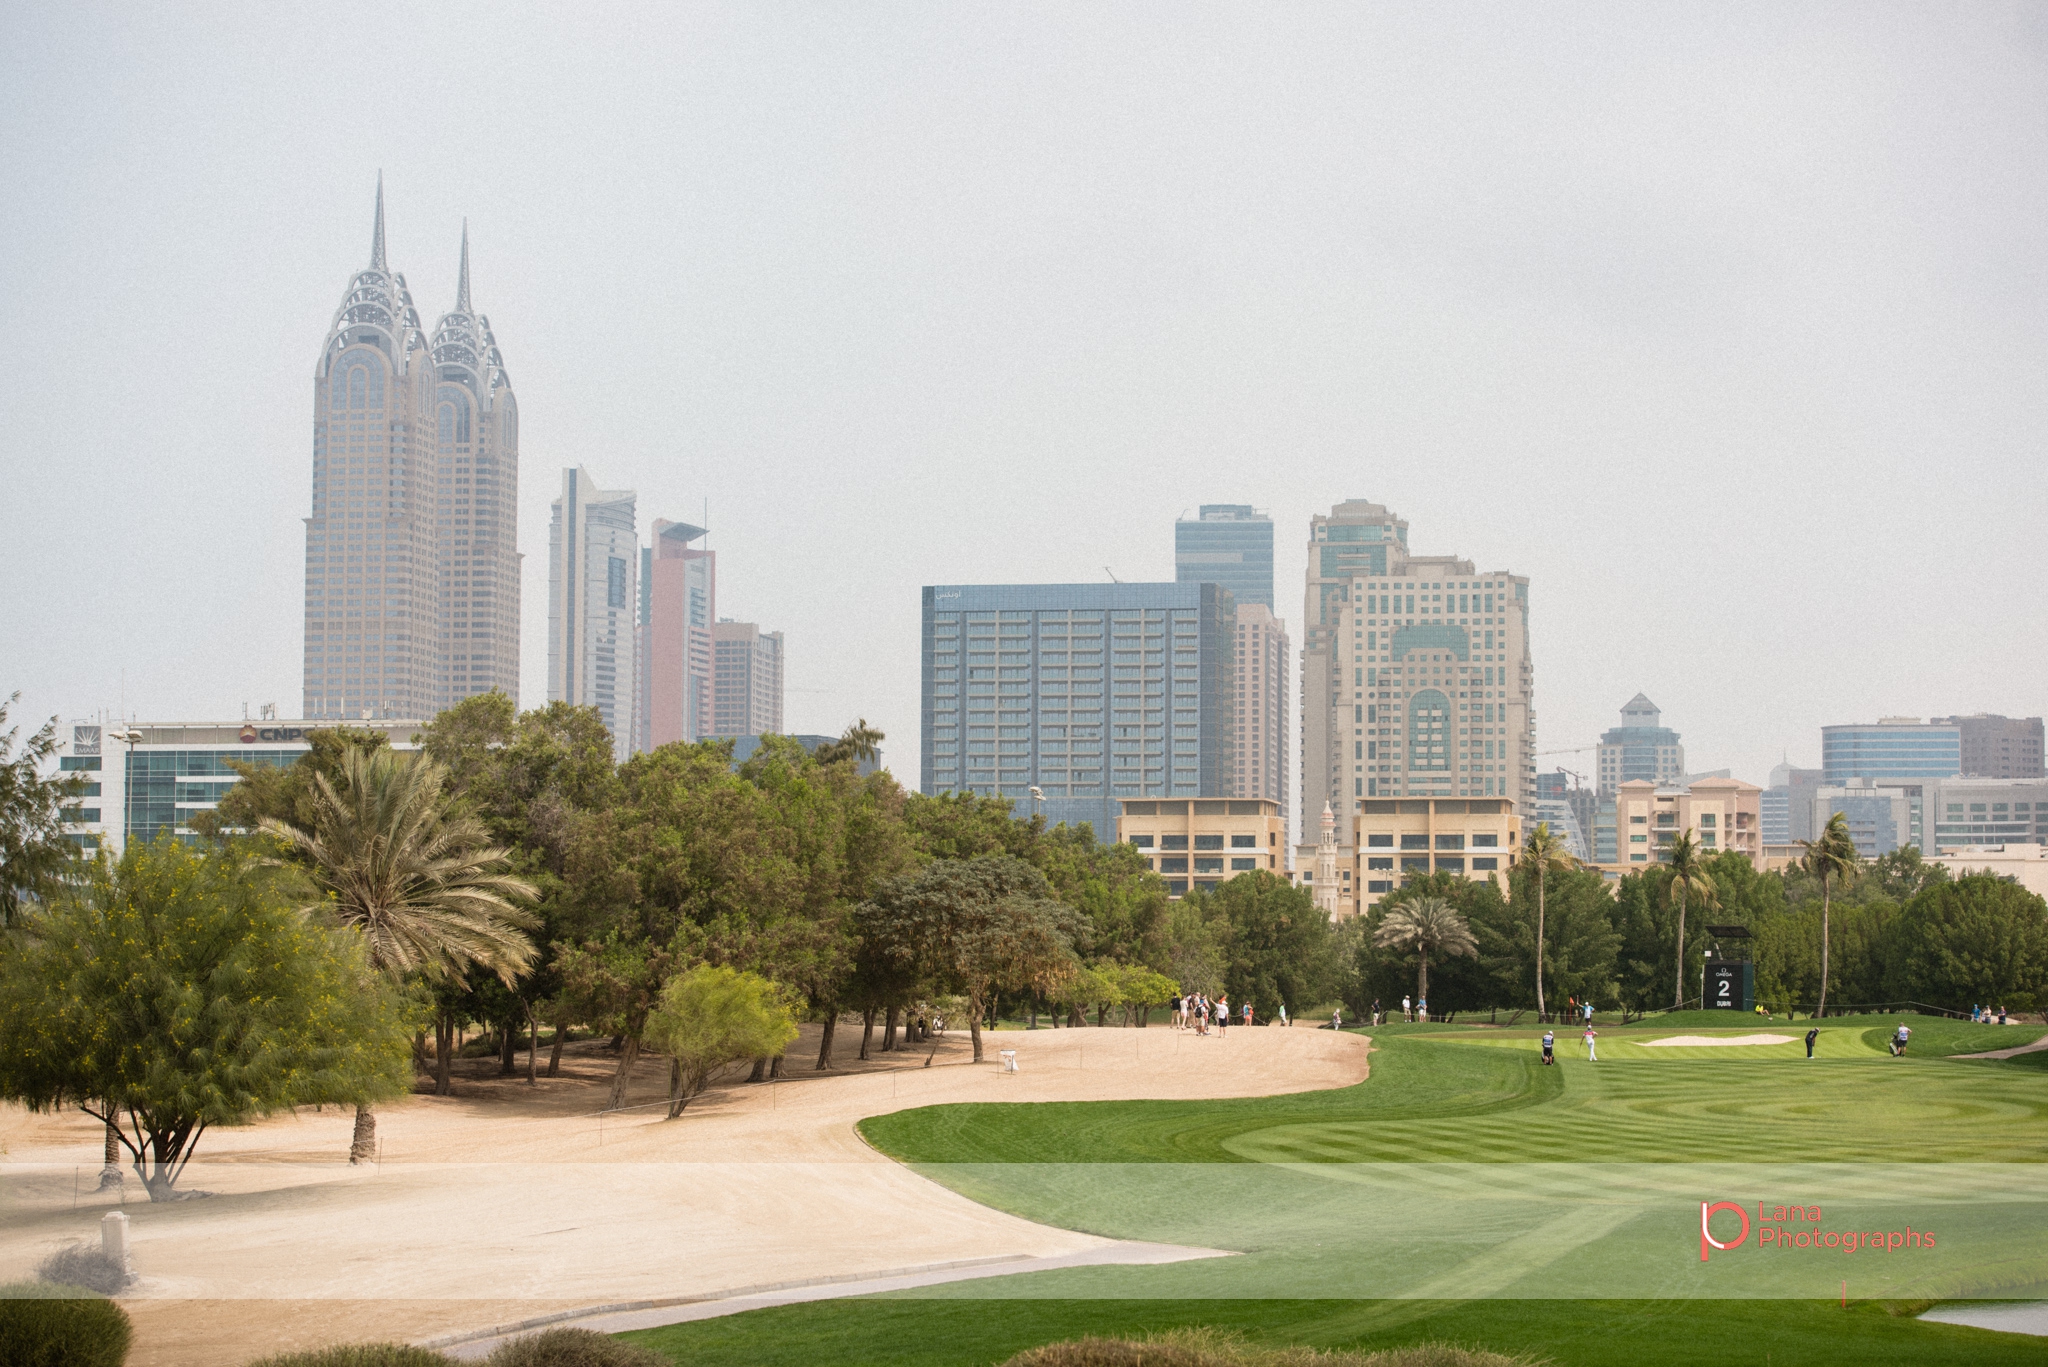  A view of Dubai Internet City and Dubai Knowledge Village from the Emirates Golf Course during the Omega Dubai Desert Classic in Dubai February 2017 